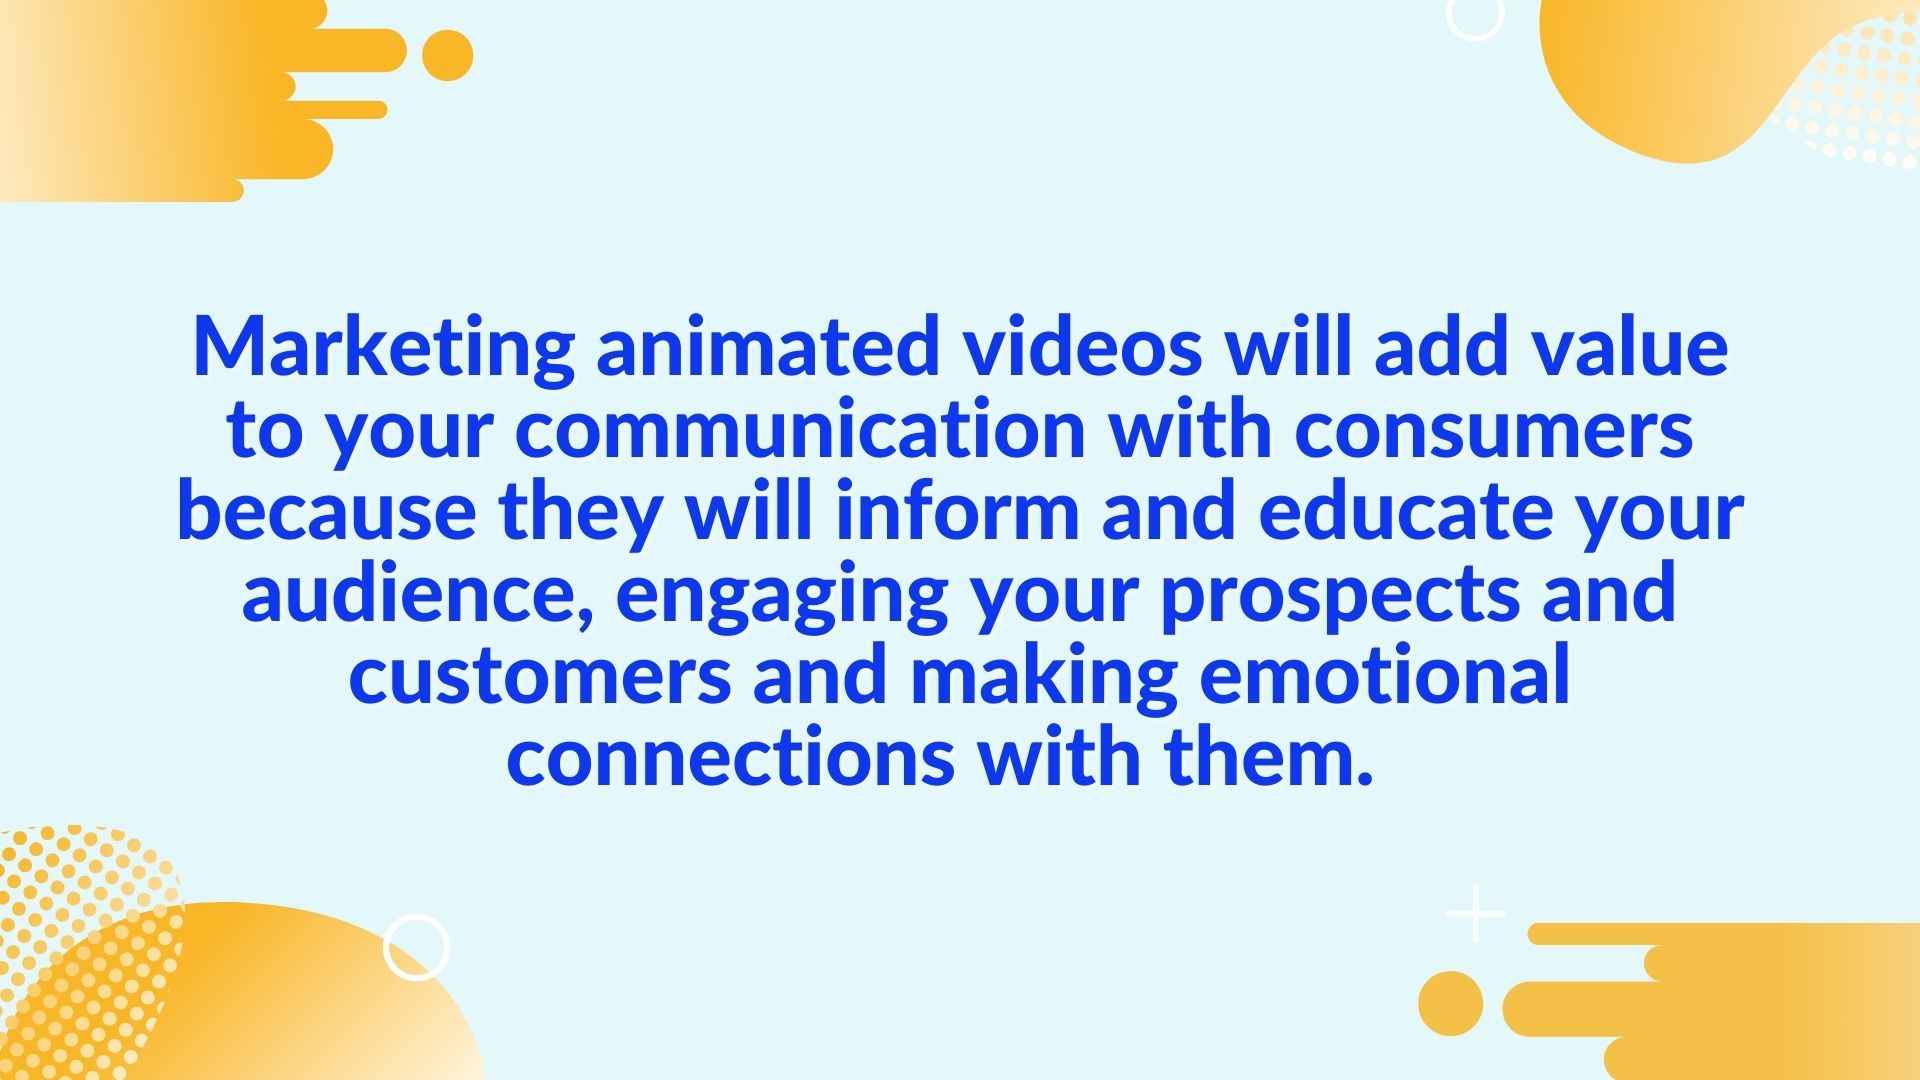 Animated marketing videos